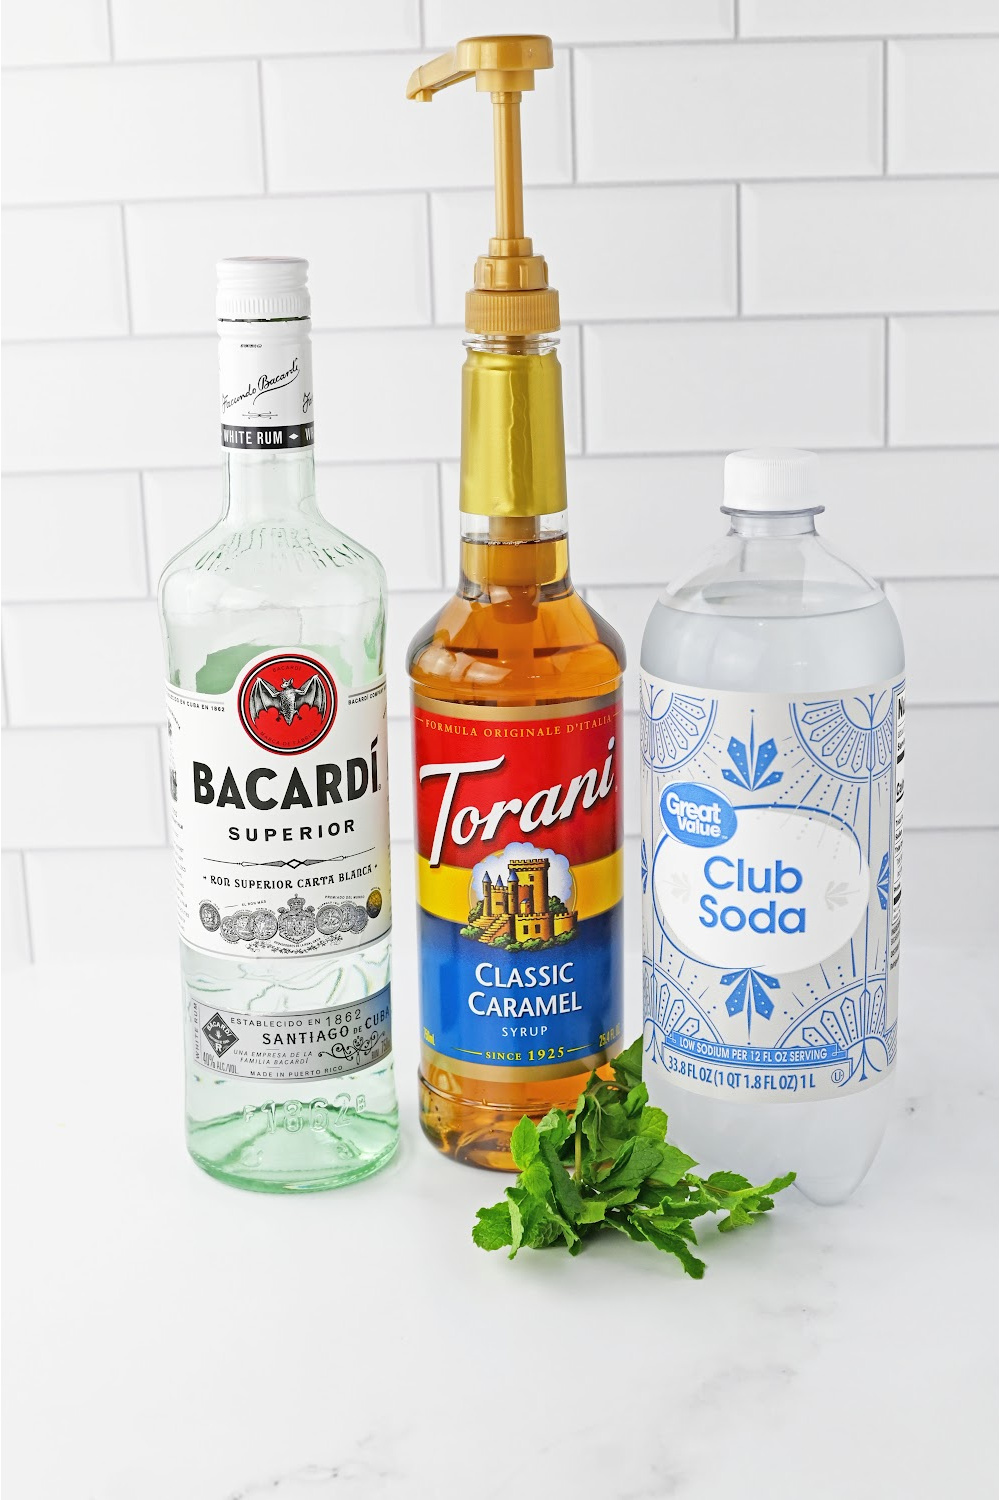 Rum, caramel liquor and club soda bottles used to make a caramel mojito